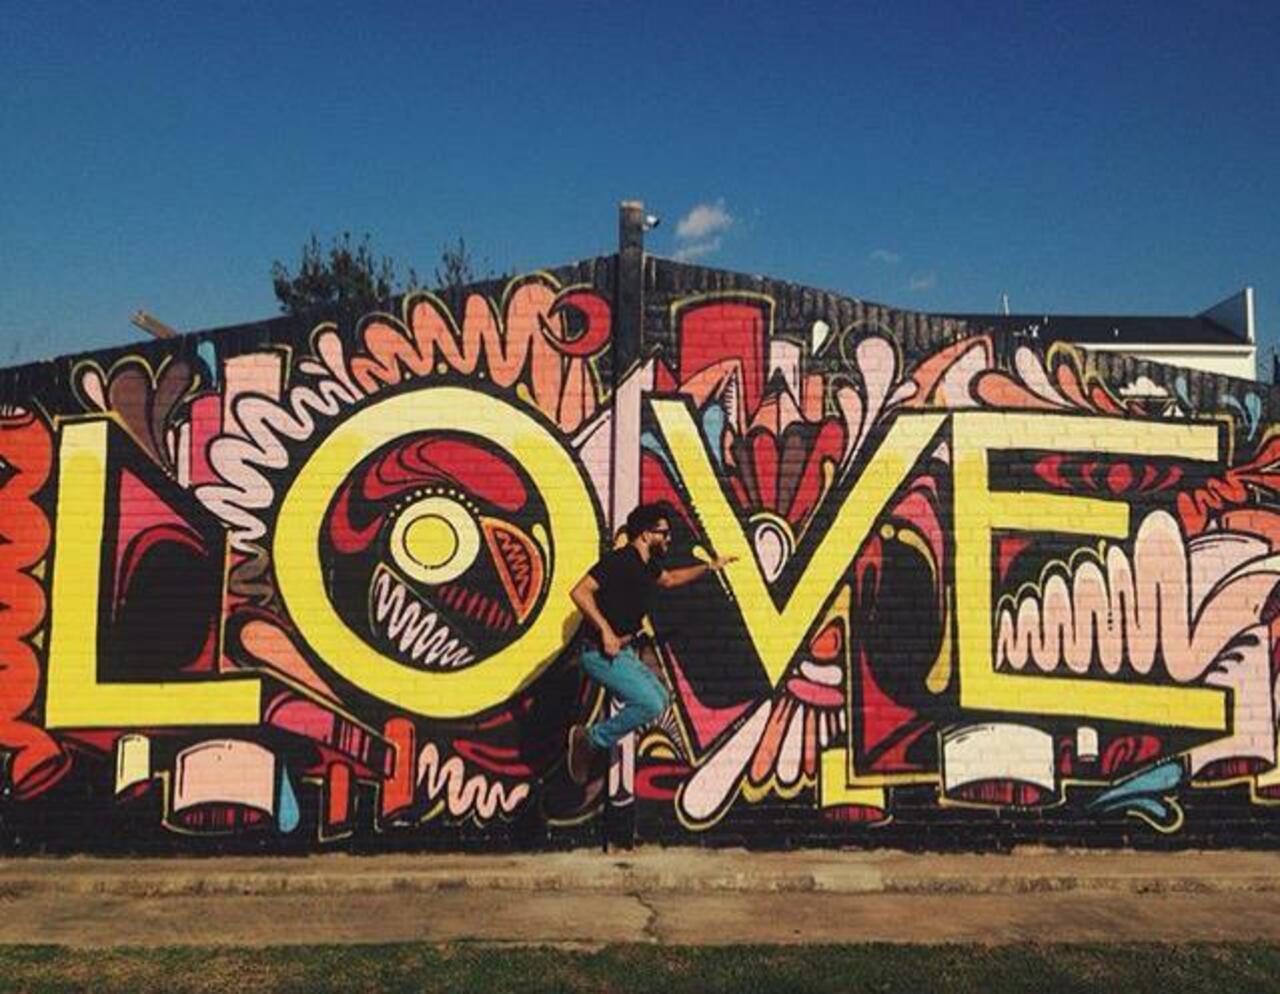 Love ❤️ Street Art by WileyArt #art #graffiti #mural #streetart http://t.co/CPS64cxW4T http://twitter.com/charlesjackso14/status/649560665364037632 … http://twitter.com/charlesjackso14/status/649568930630115329